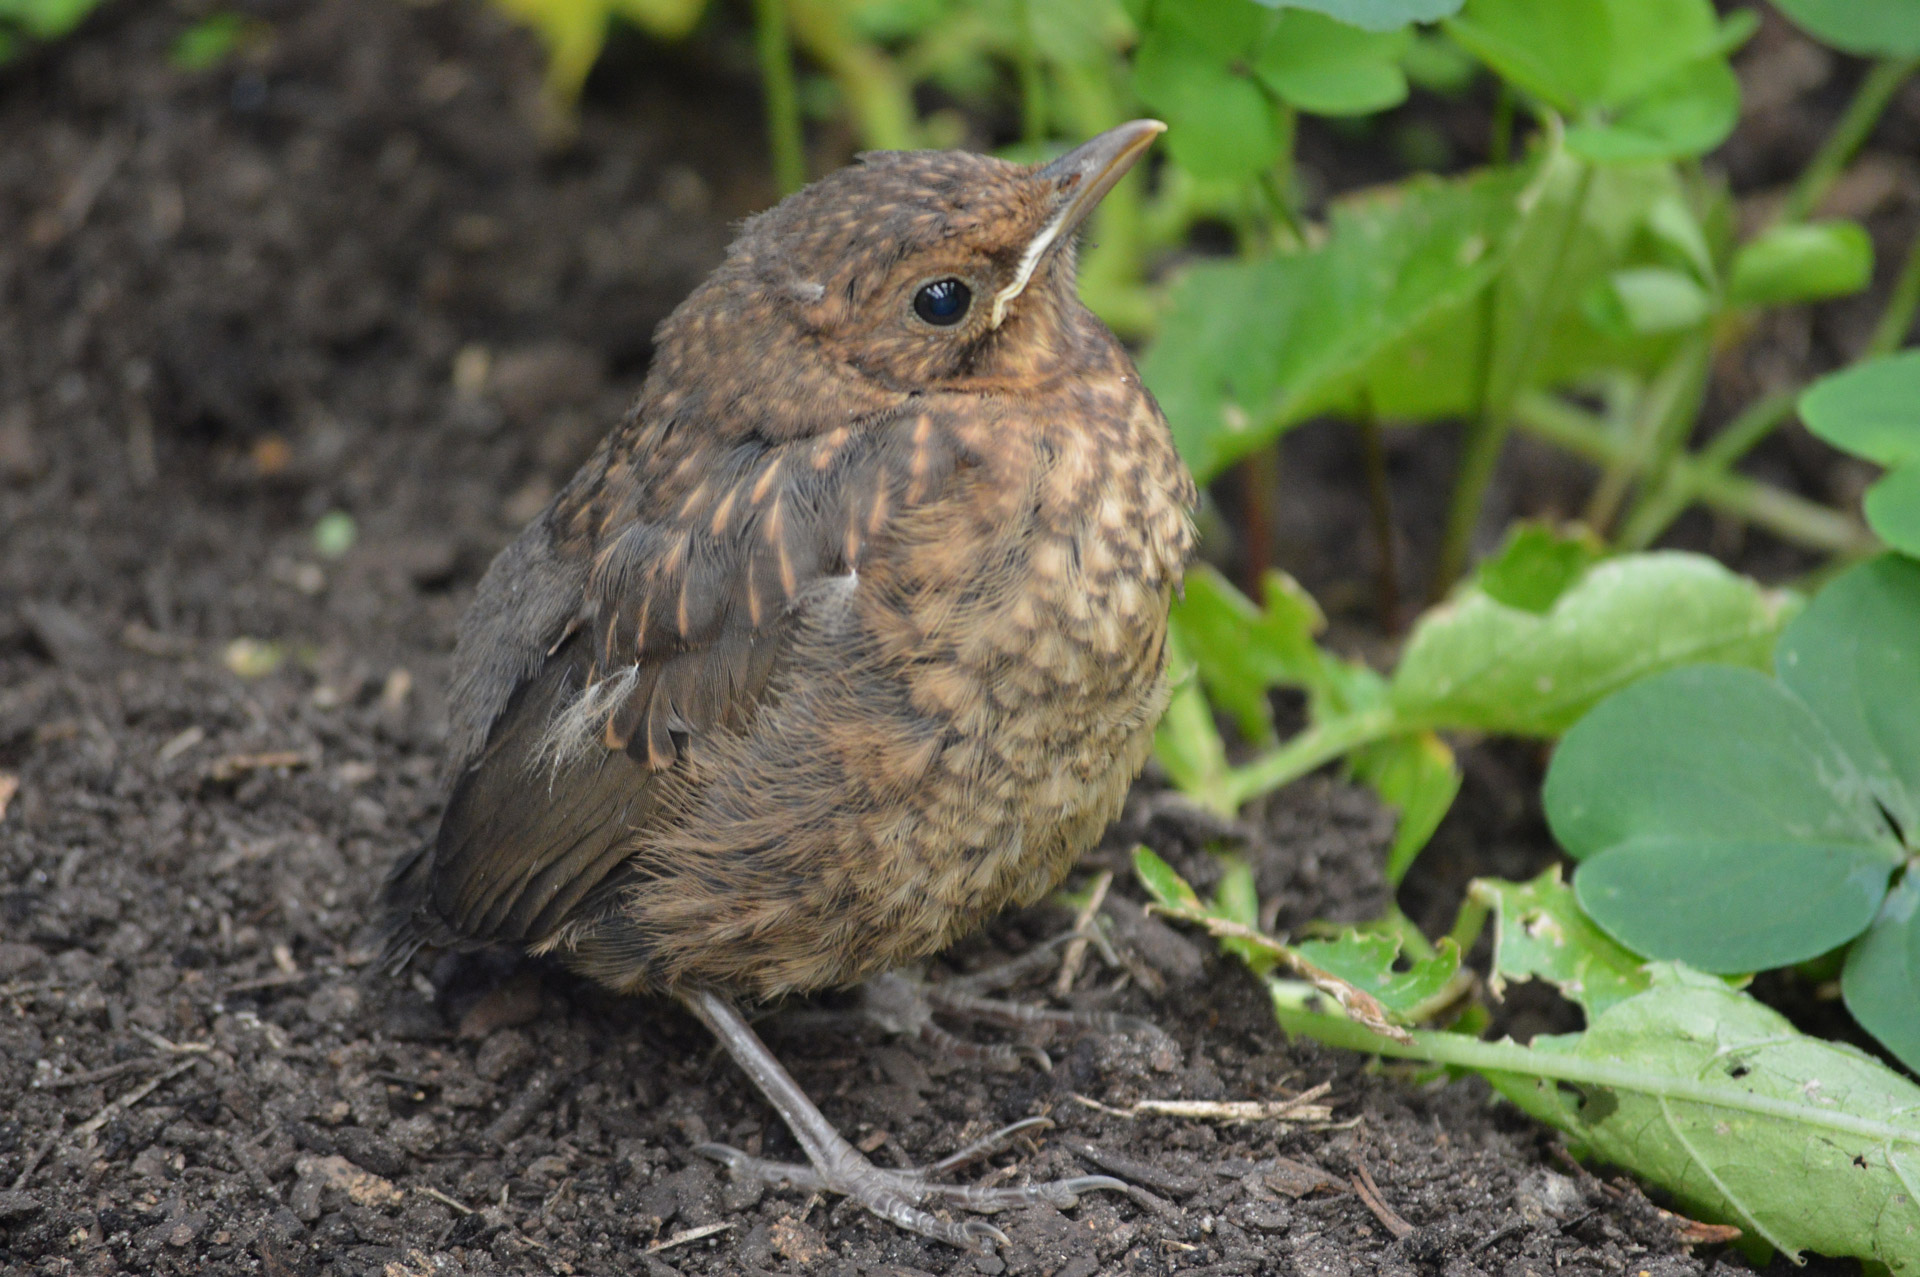 Young bird posing in garden